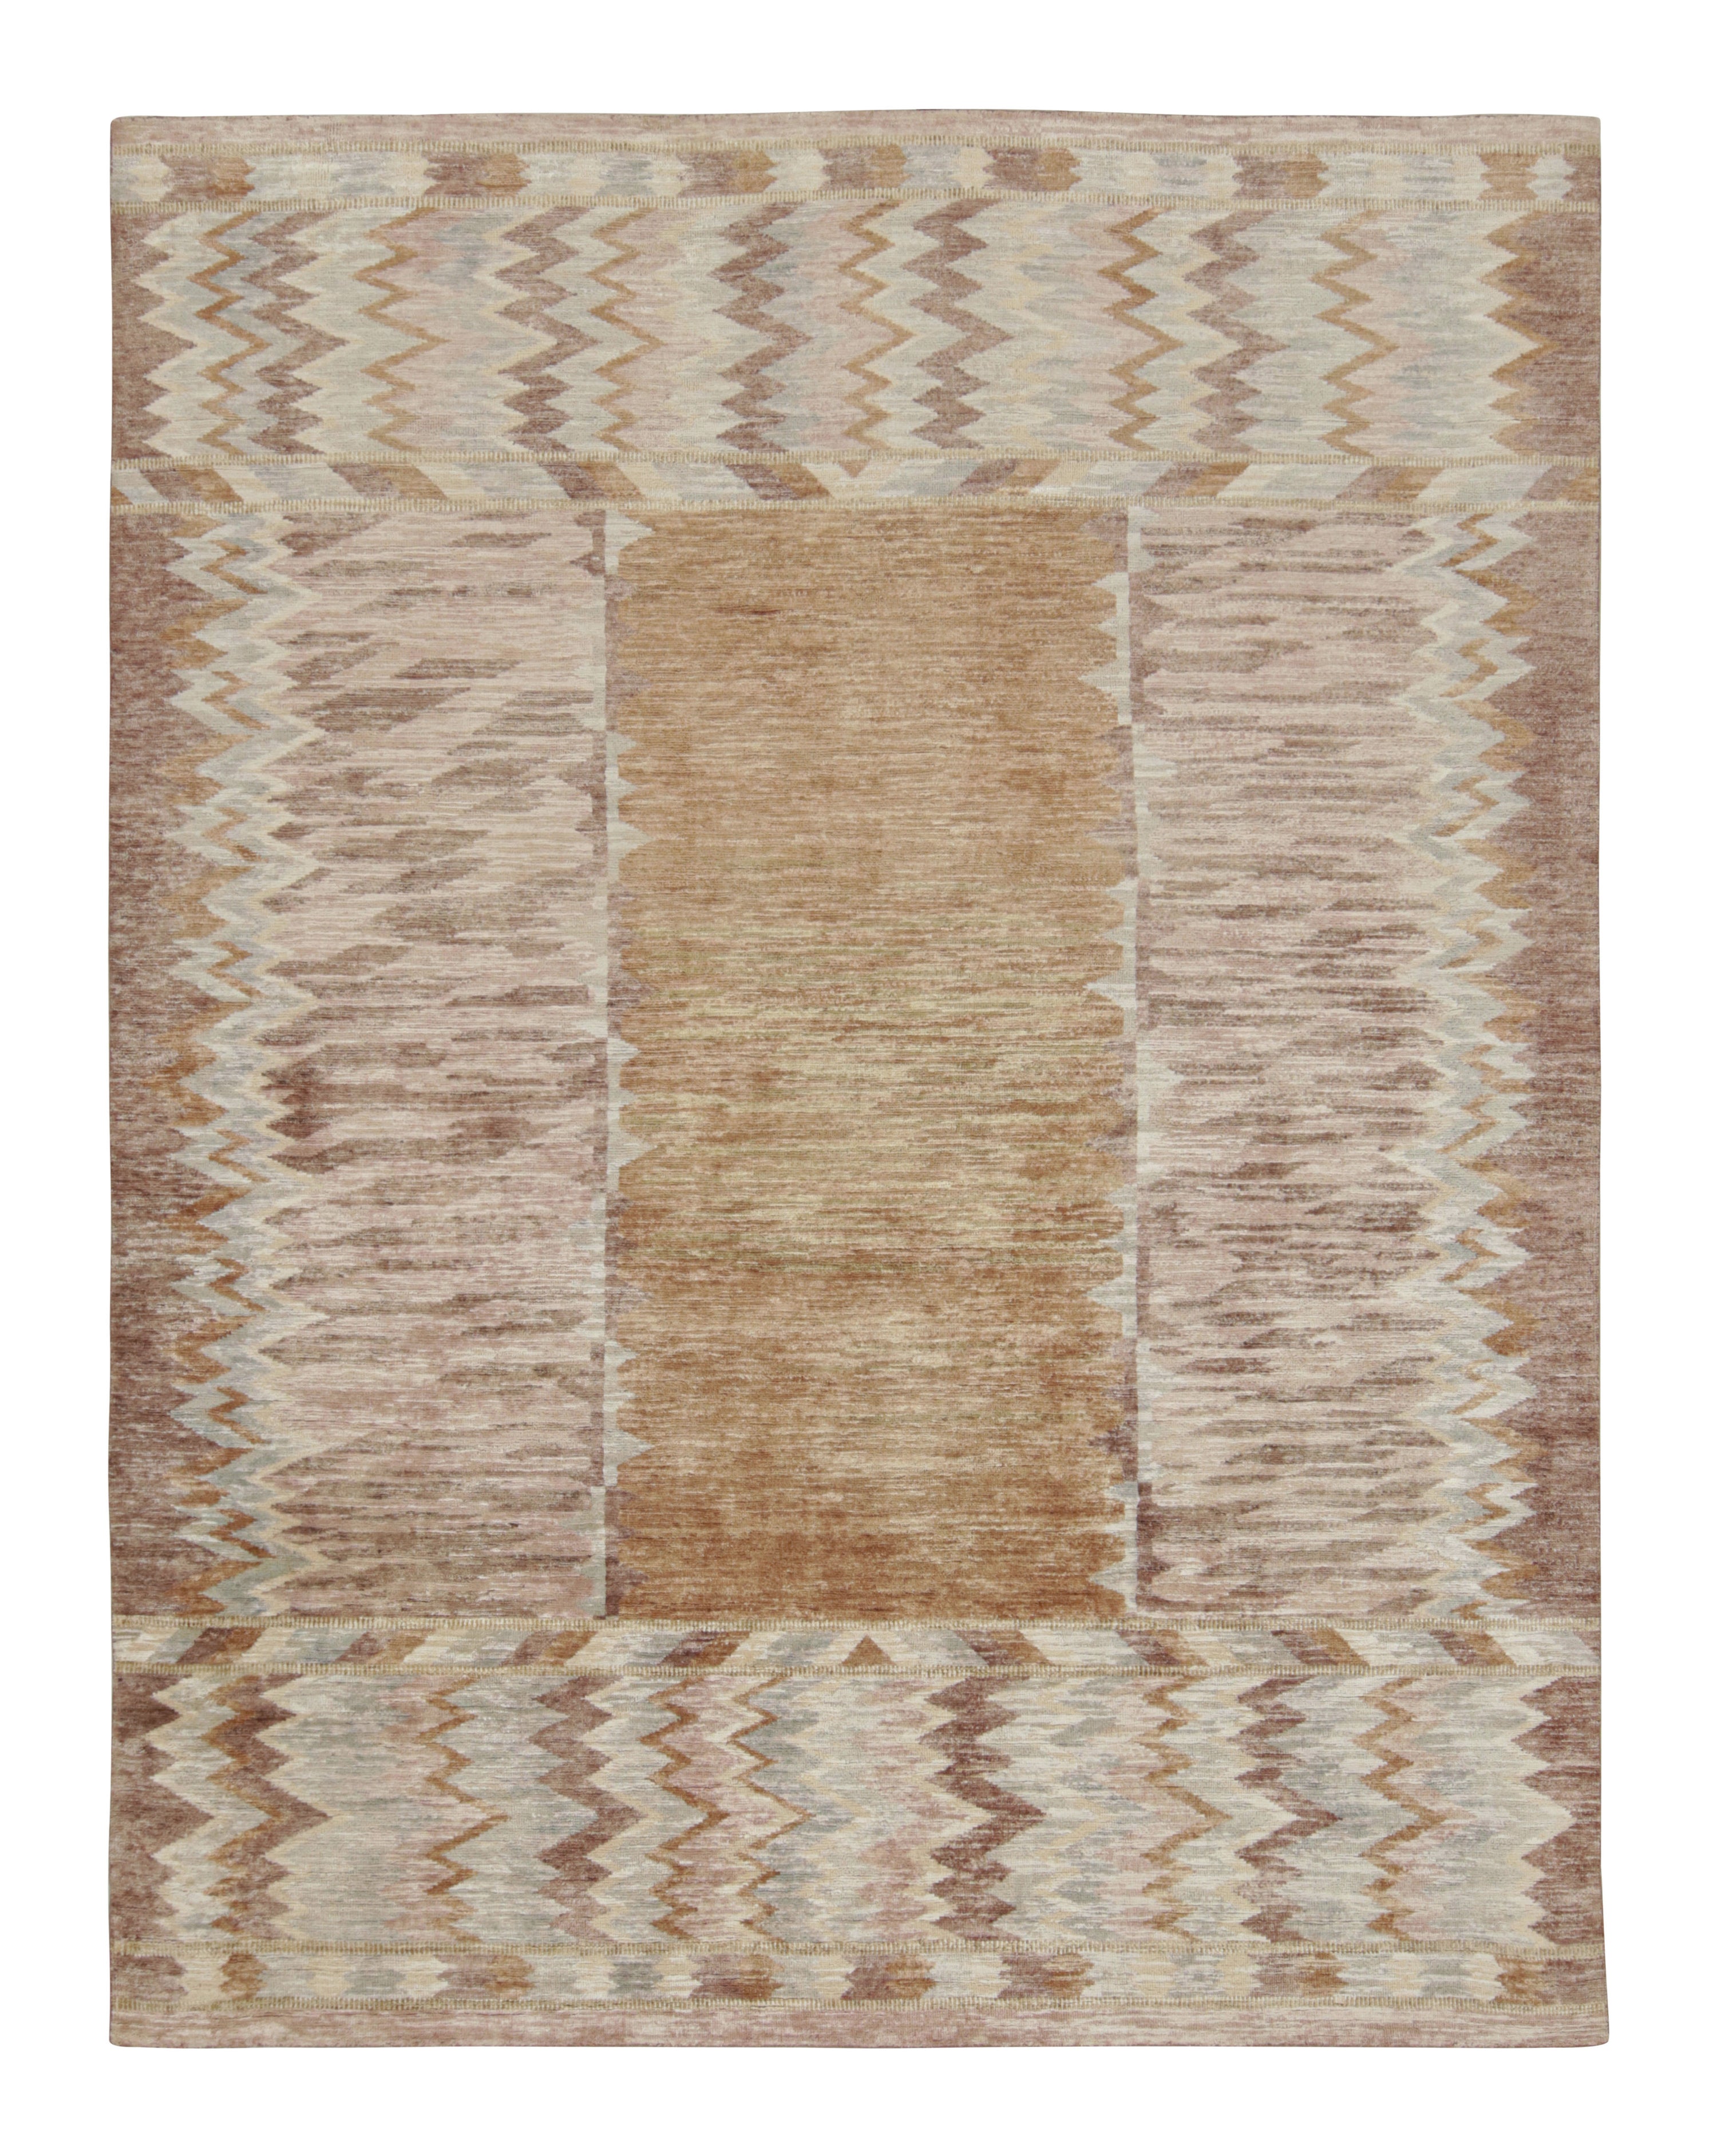 Brown Traditional Wool Rug - 7'11" x 10'4"